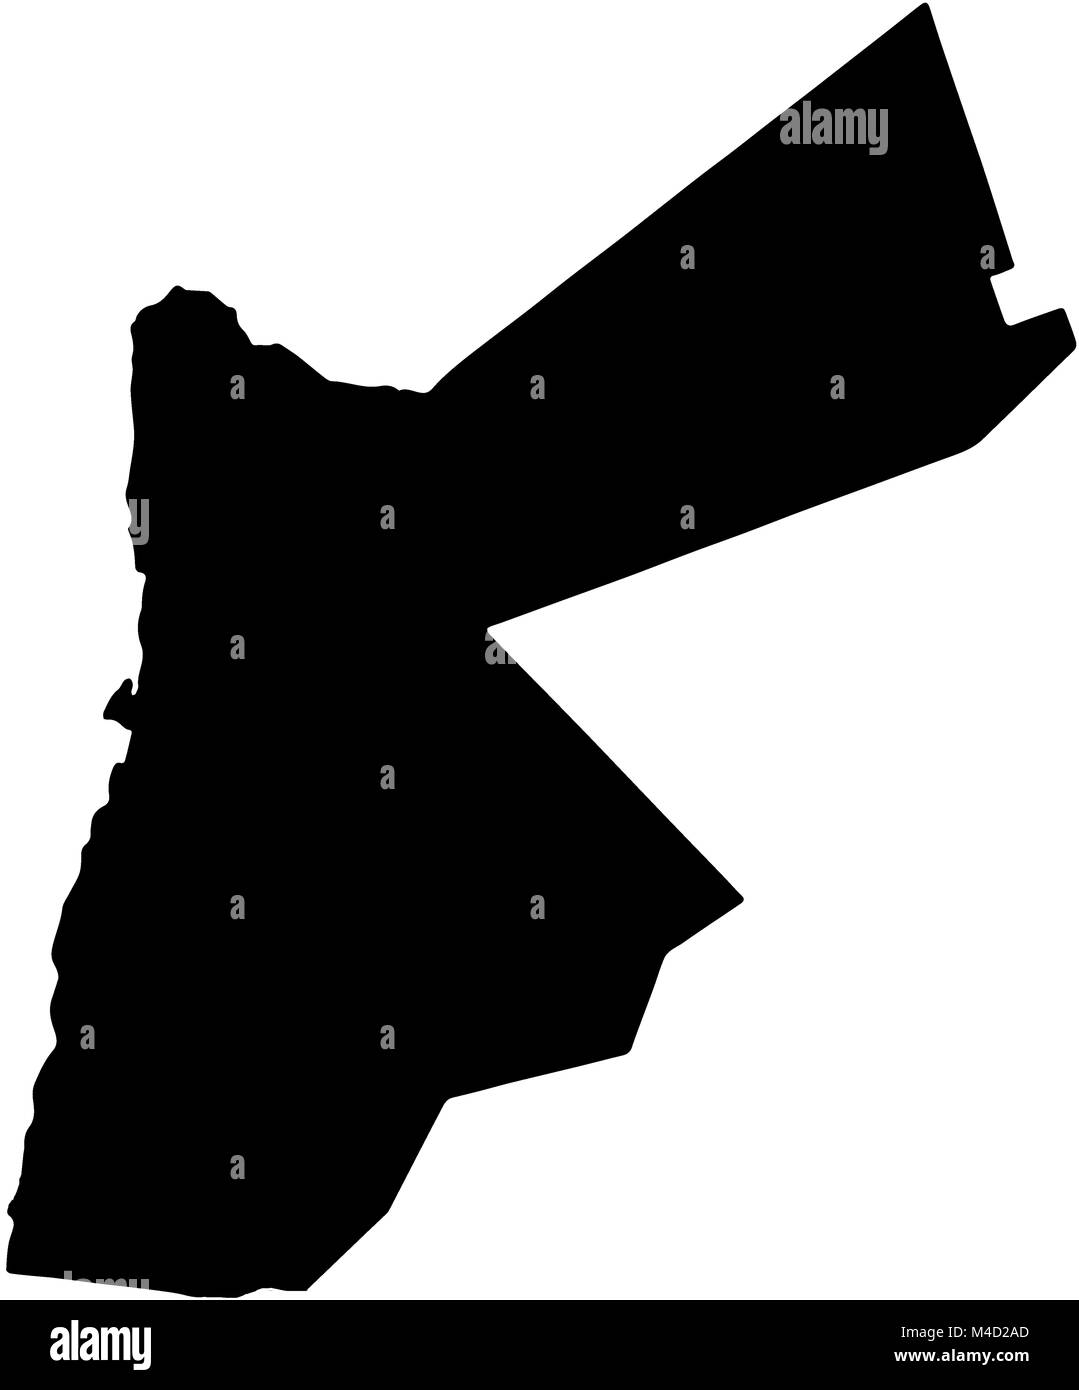 Jordan country Map illustration black. Stock Photo